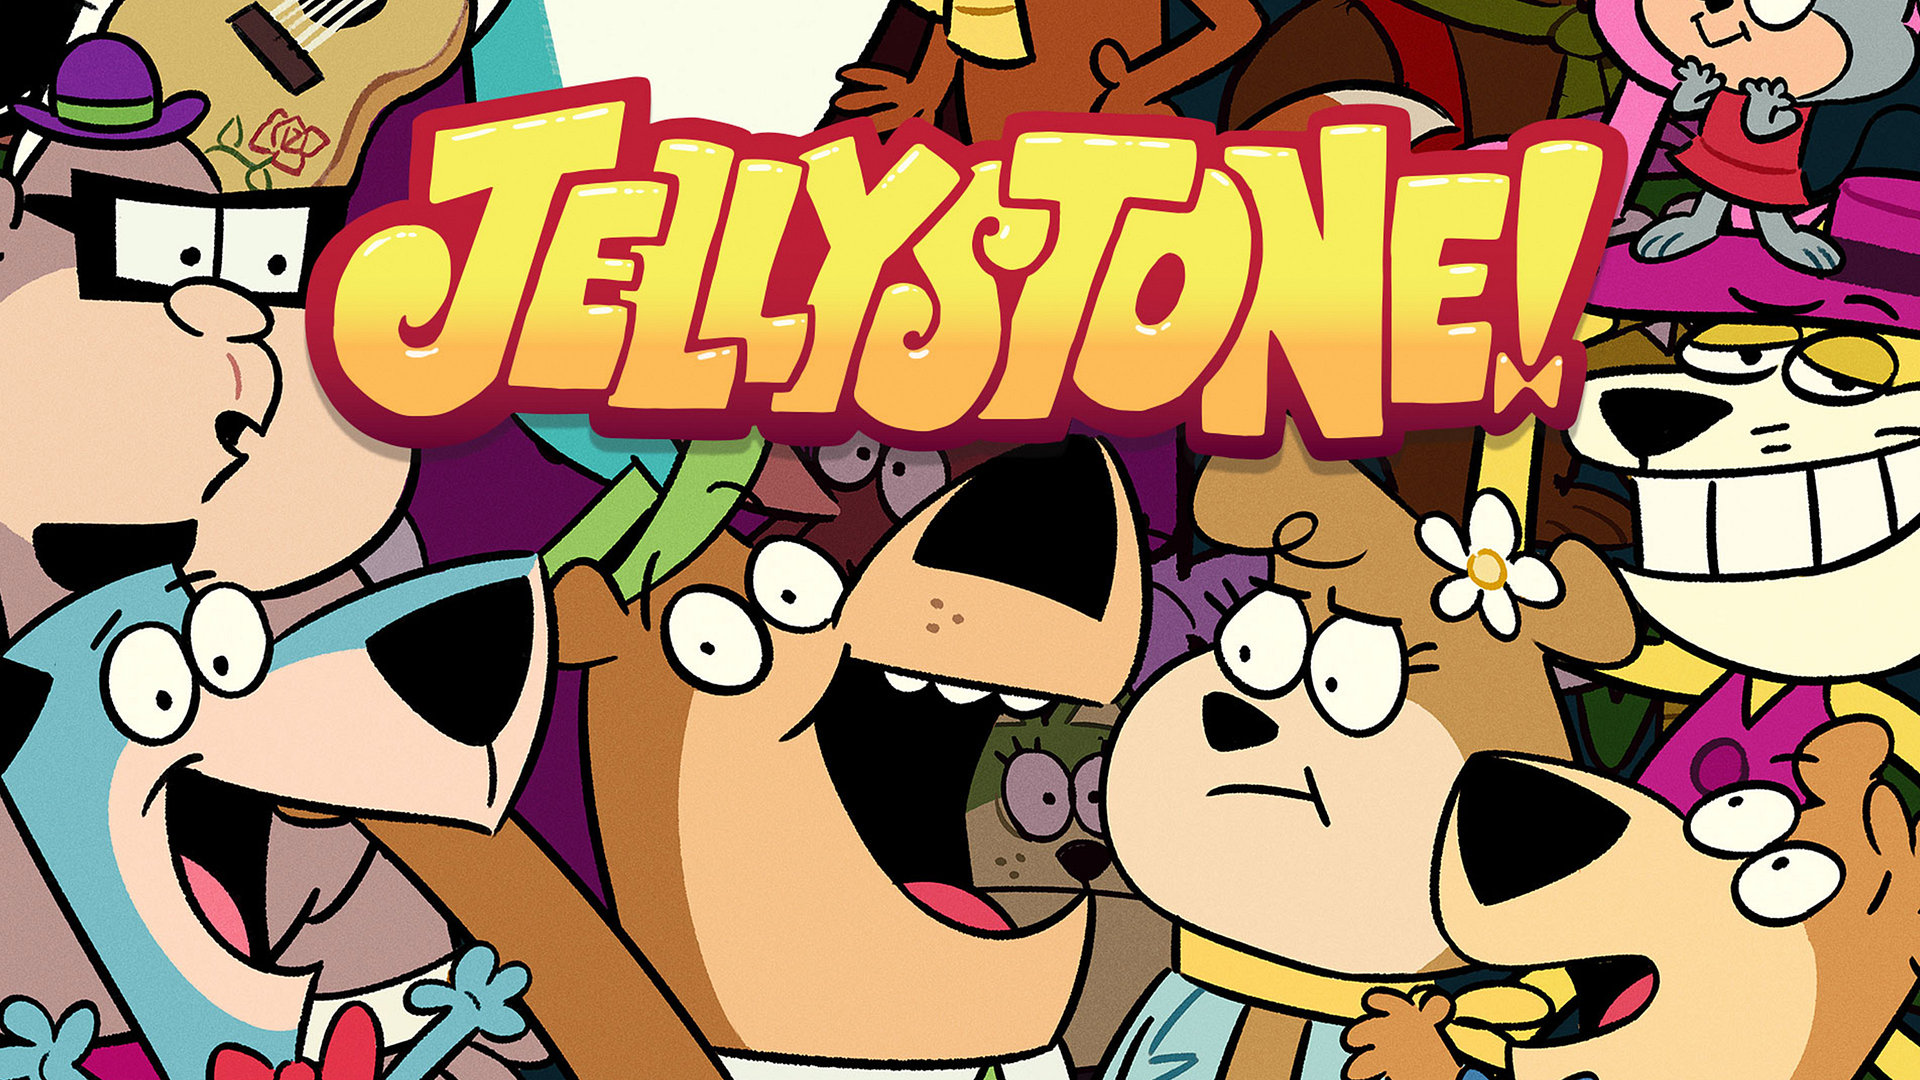 Jellystone!